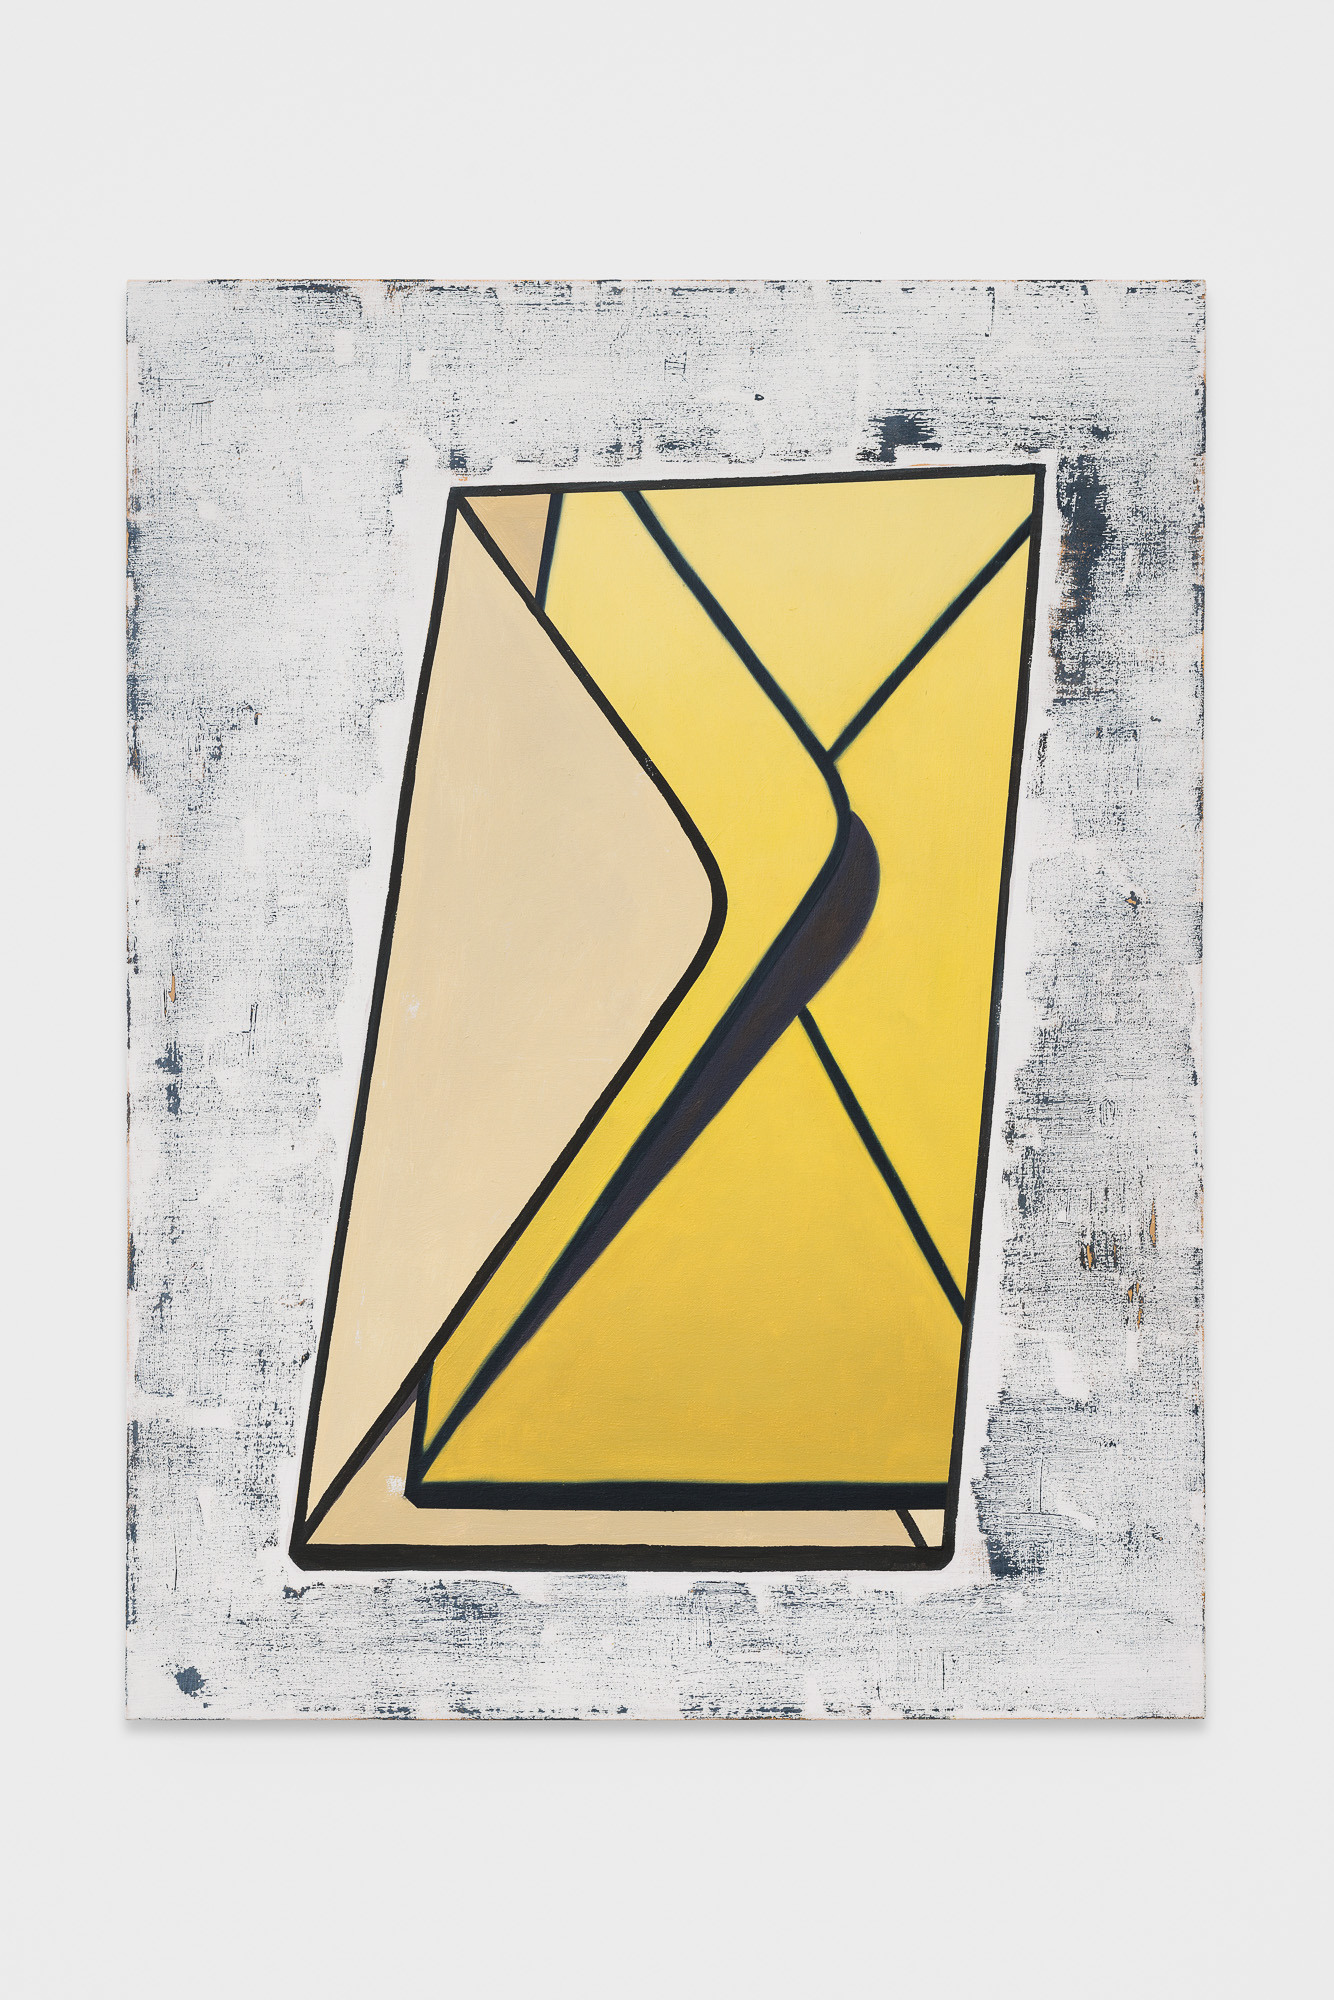 Anne Neukamp, Correspondence, 2024, oil, tempera, acrylic on canvas, 80 x 60 cm